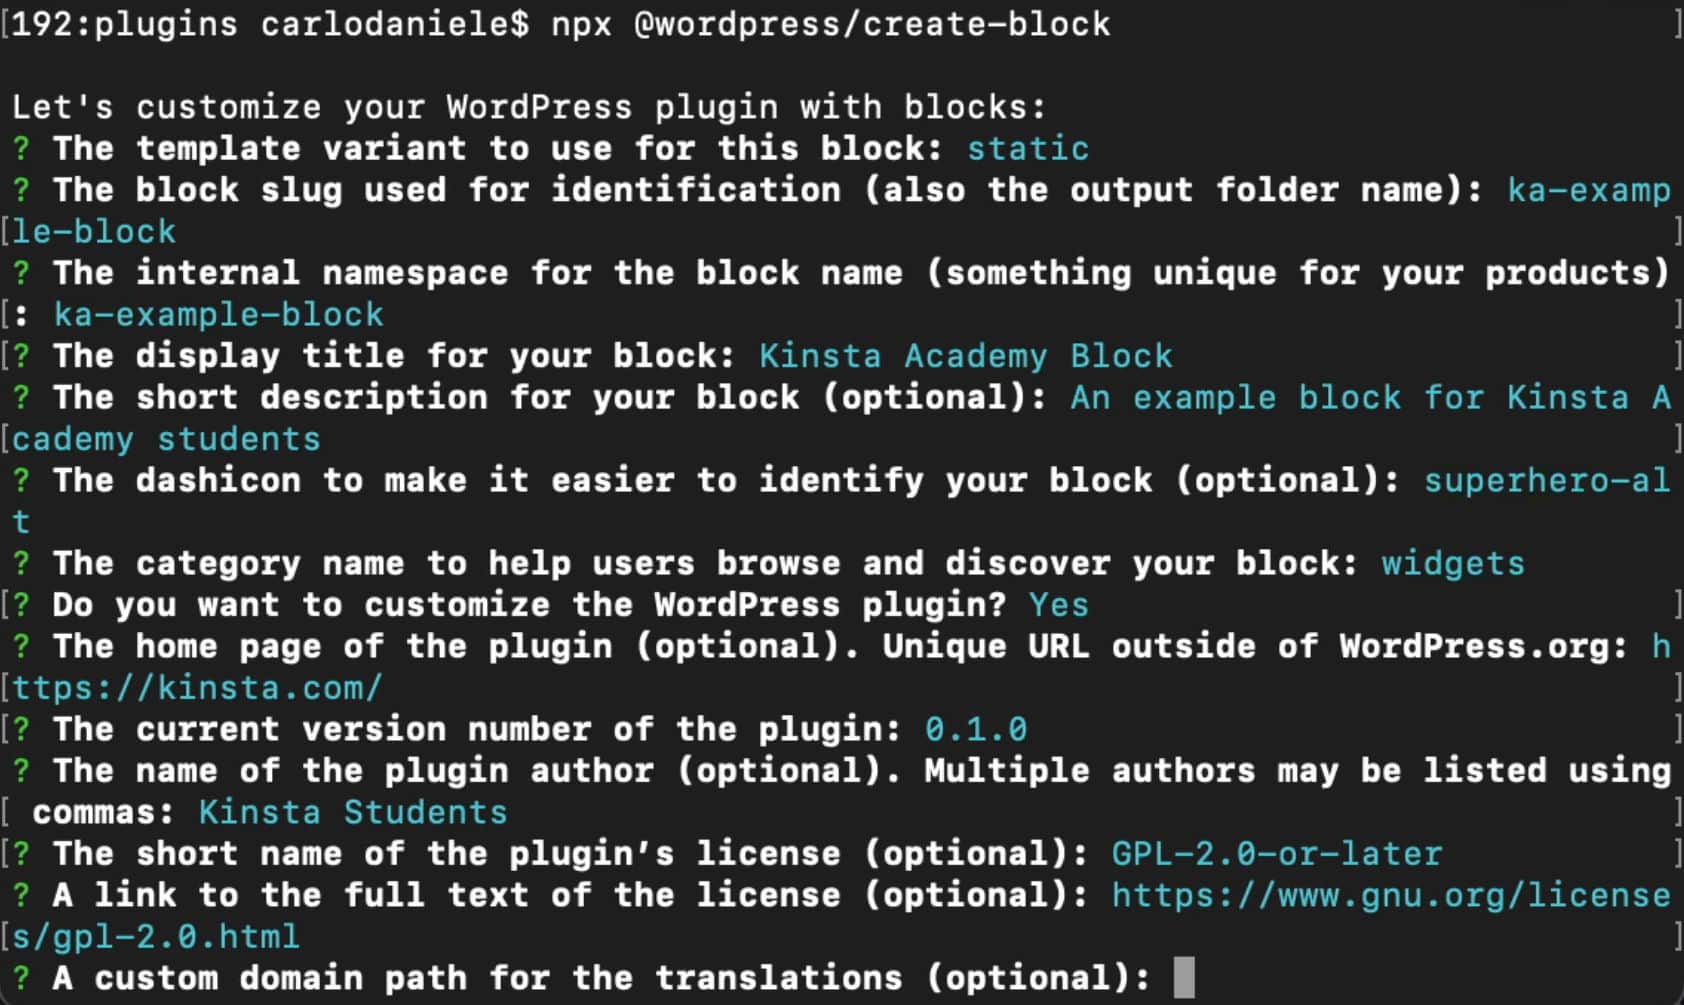 Running Create Block in interactive mode